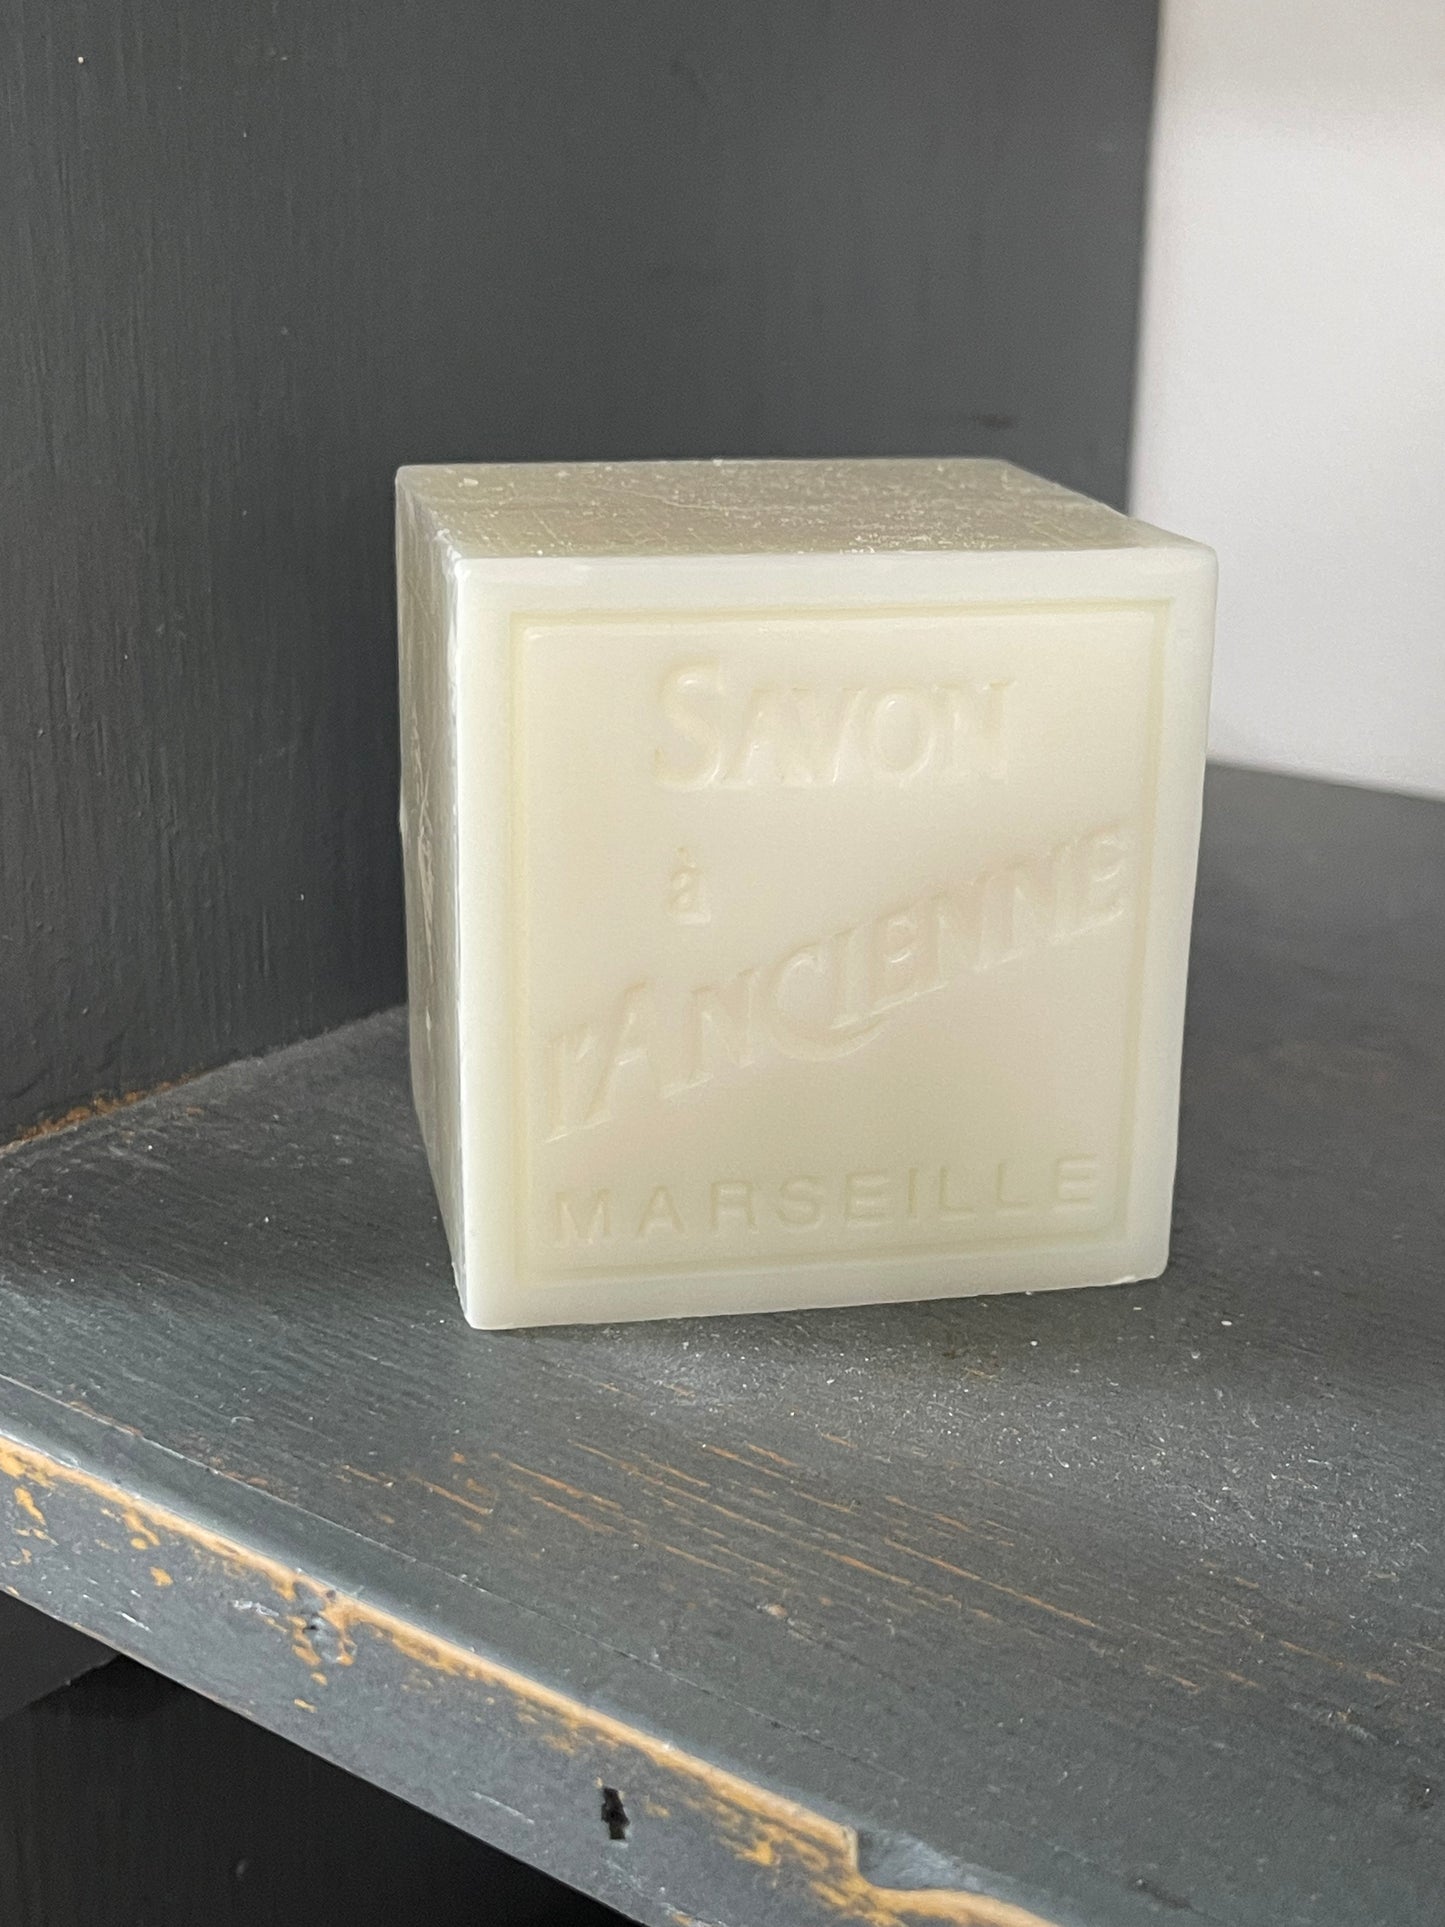 72% Marseille Soap Cube - Pre De Provence